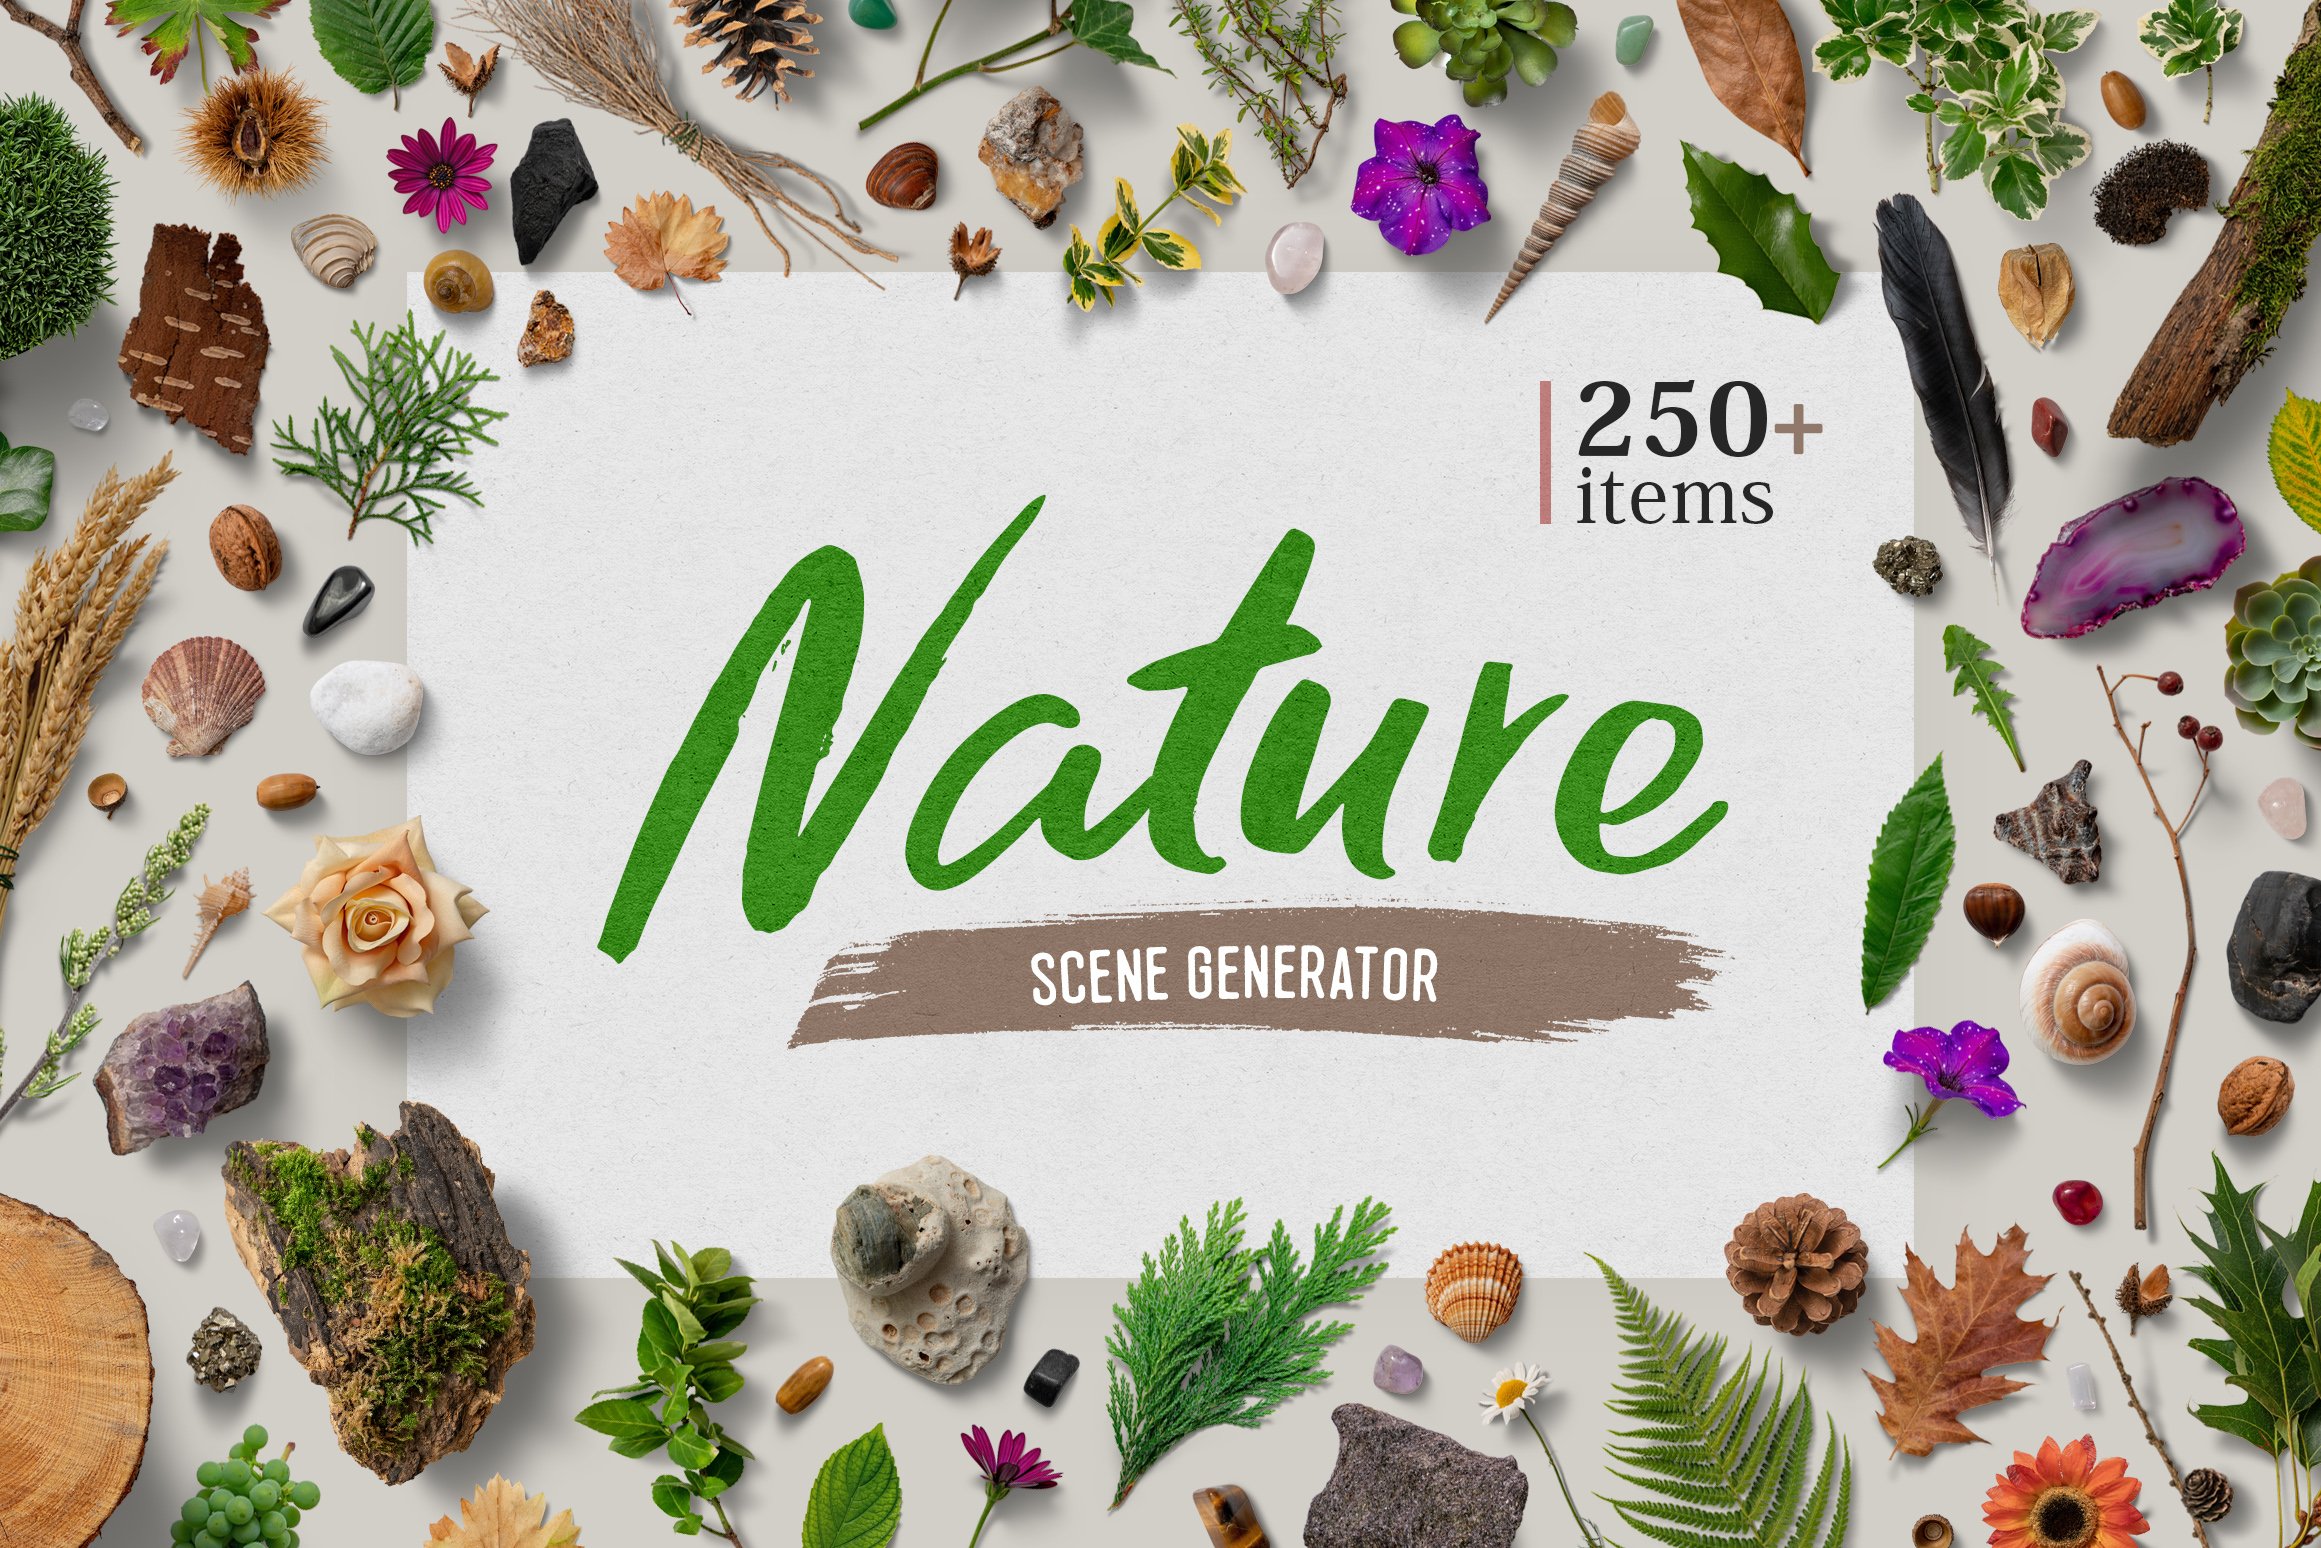 Nature Scene Generator cover image.